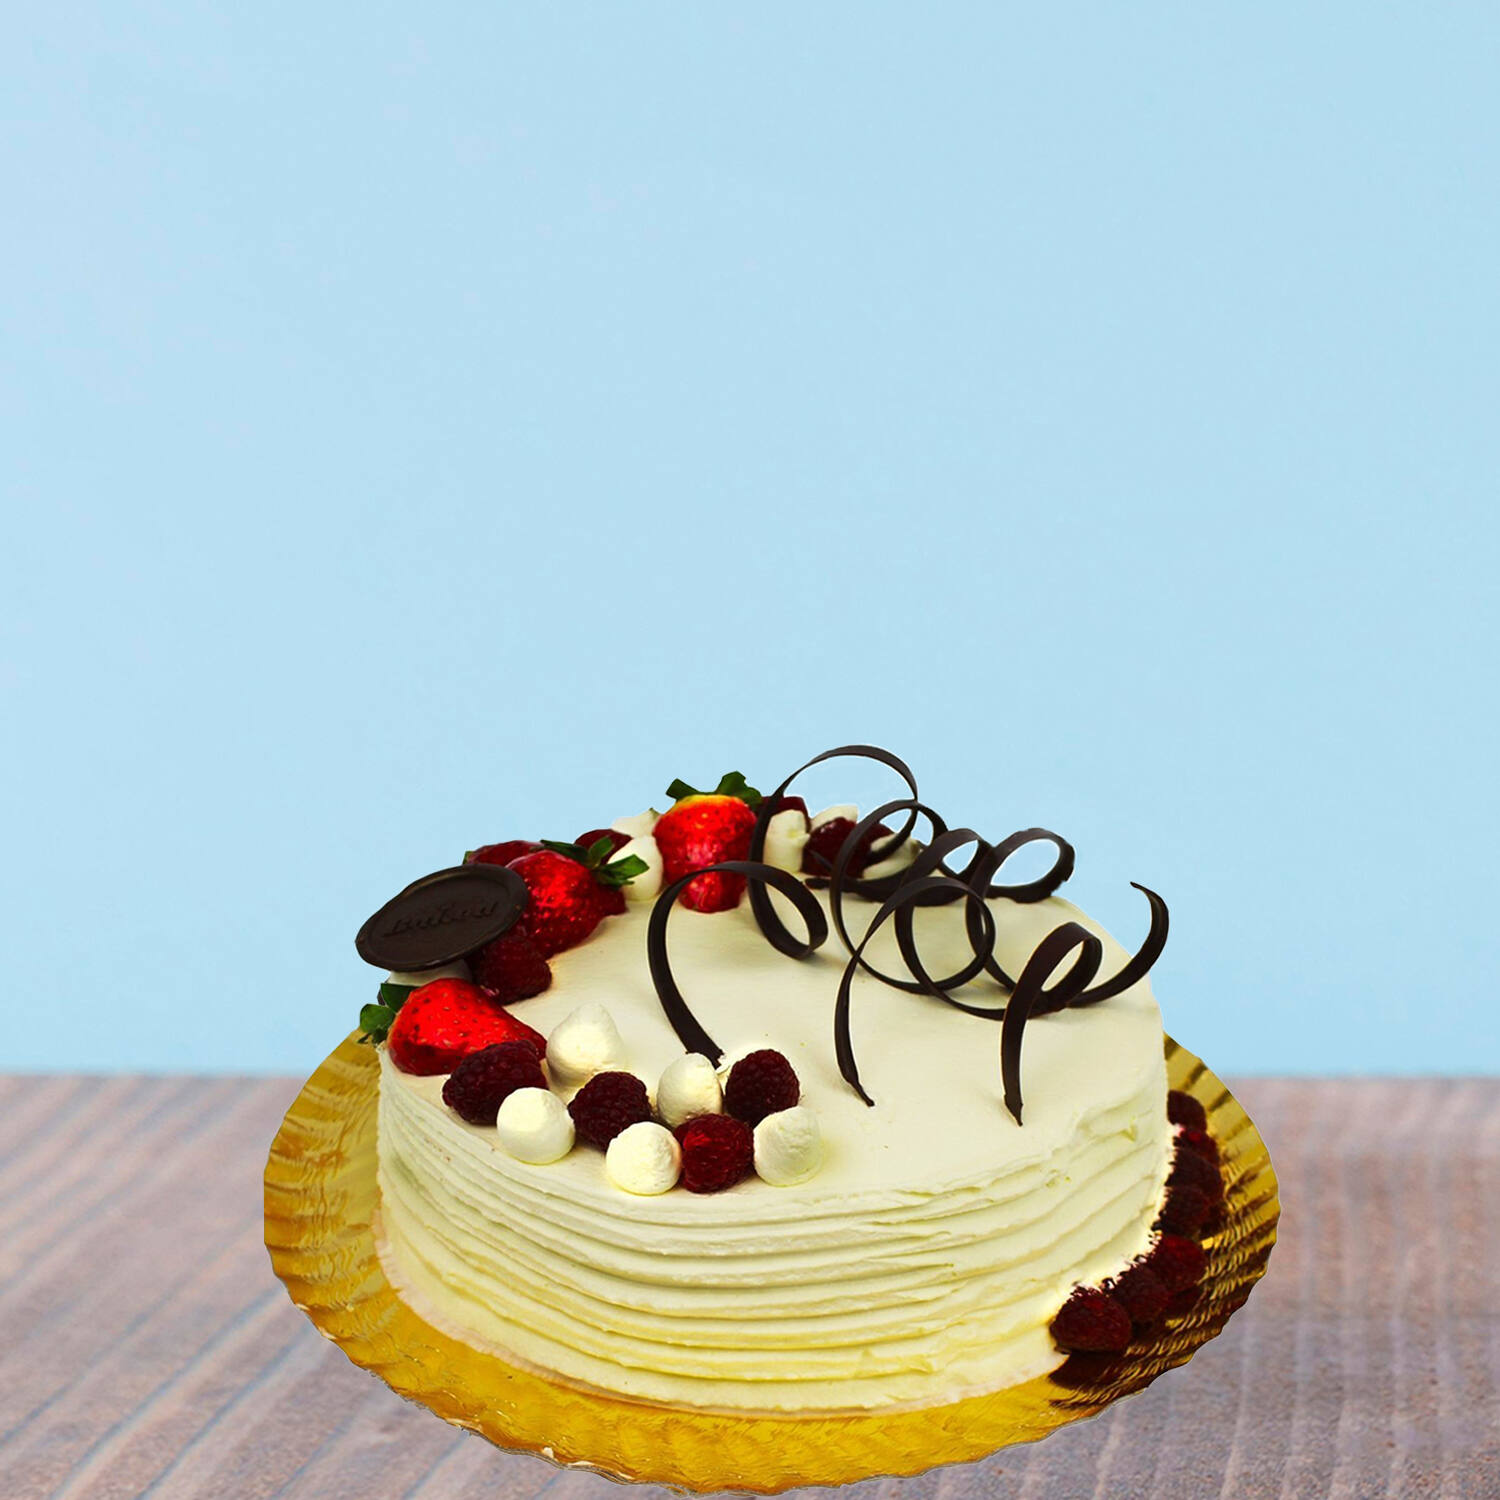 Build Your Own Cake - O'Hehirs Bakery & Cafe - Customisable Cake